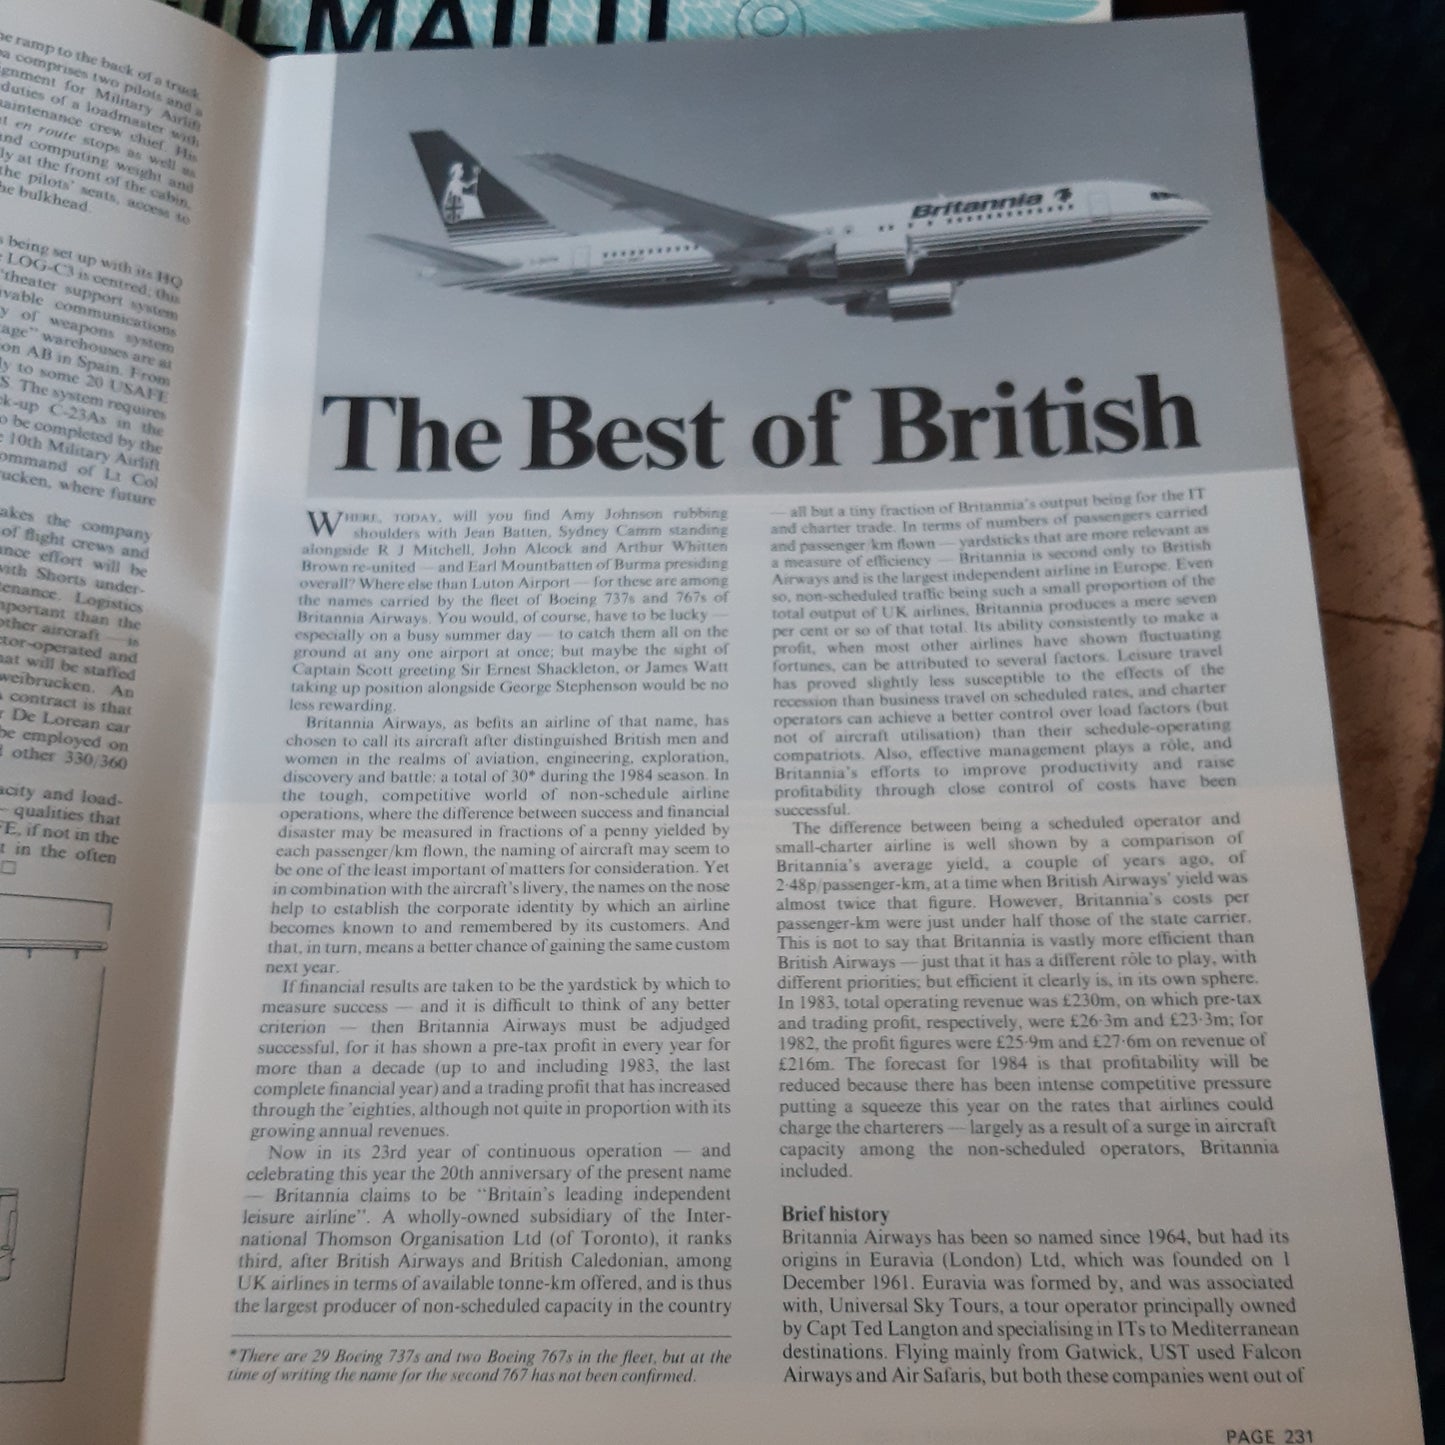 air international november 1984 vol 27 no 5